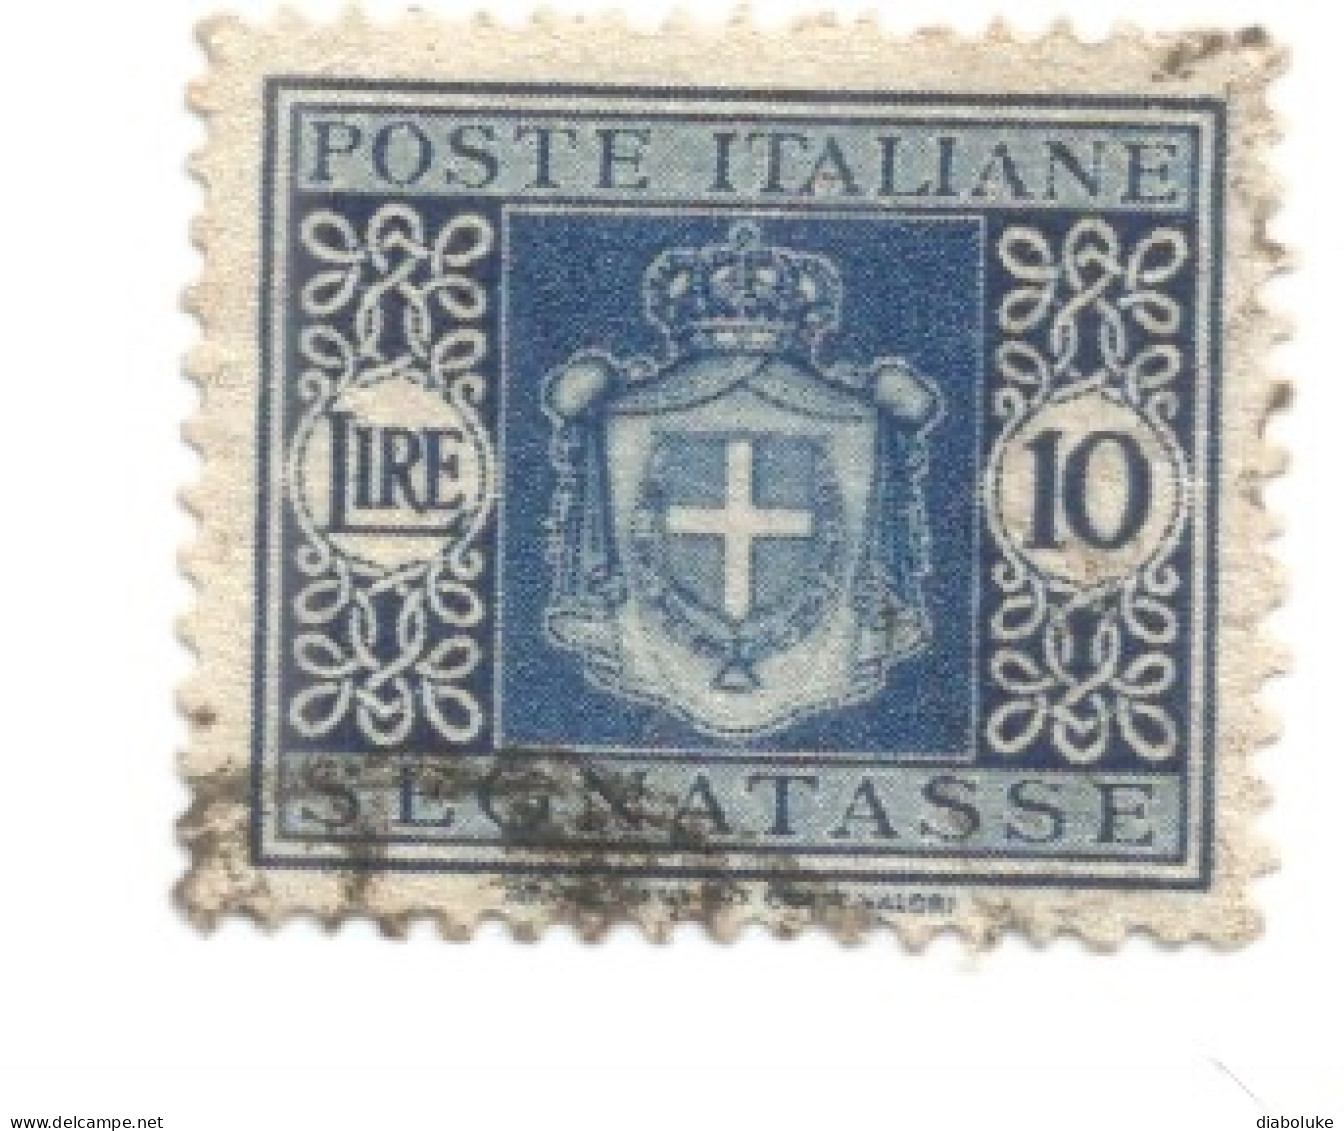 (REGNO D'ITALIA) 1945, SEGNATASSE, STEMMA SENZA FASCI - 2 Francobolli Usati - Postage Due